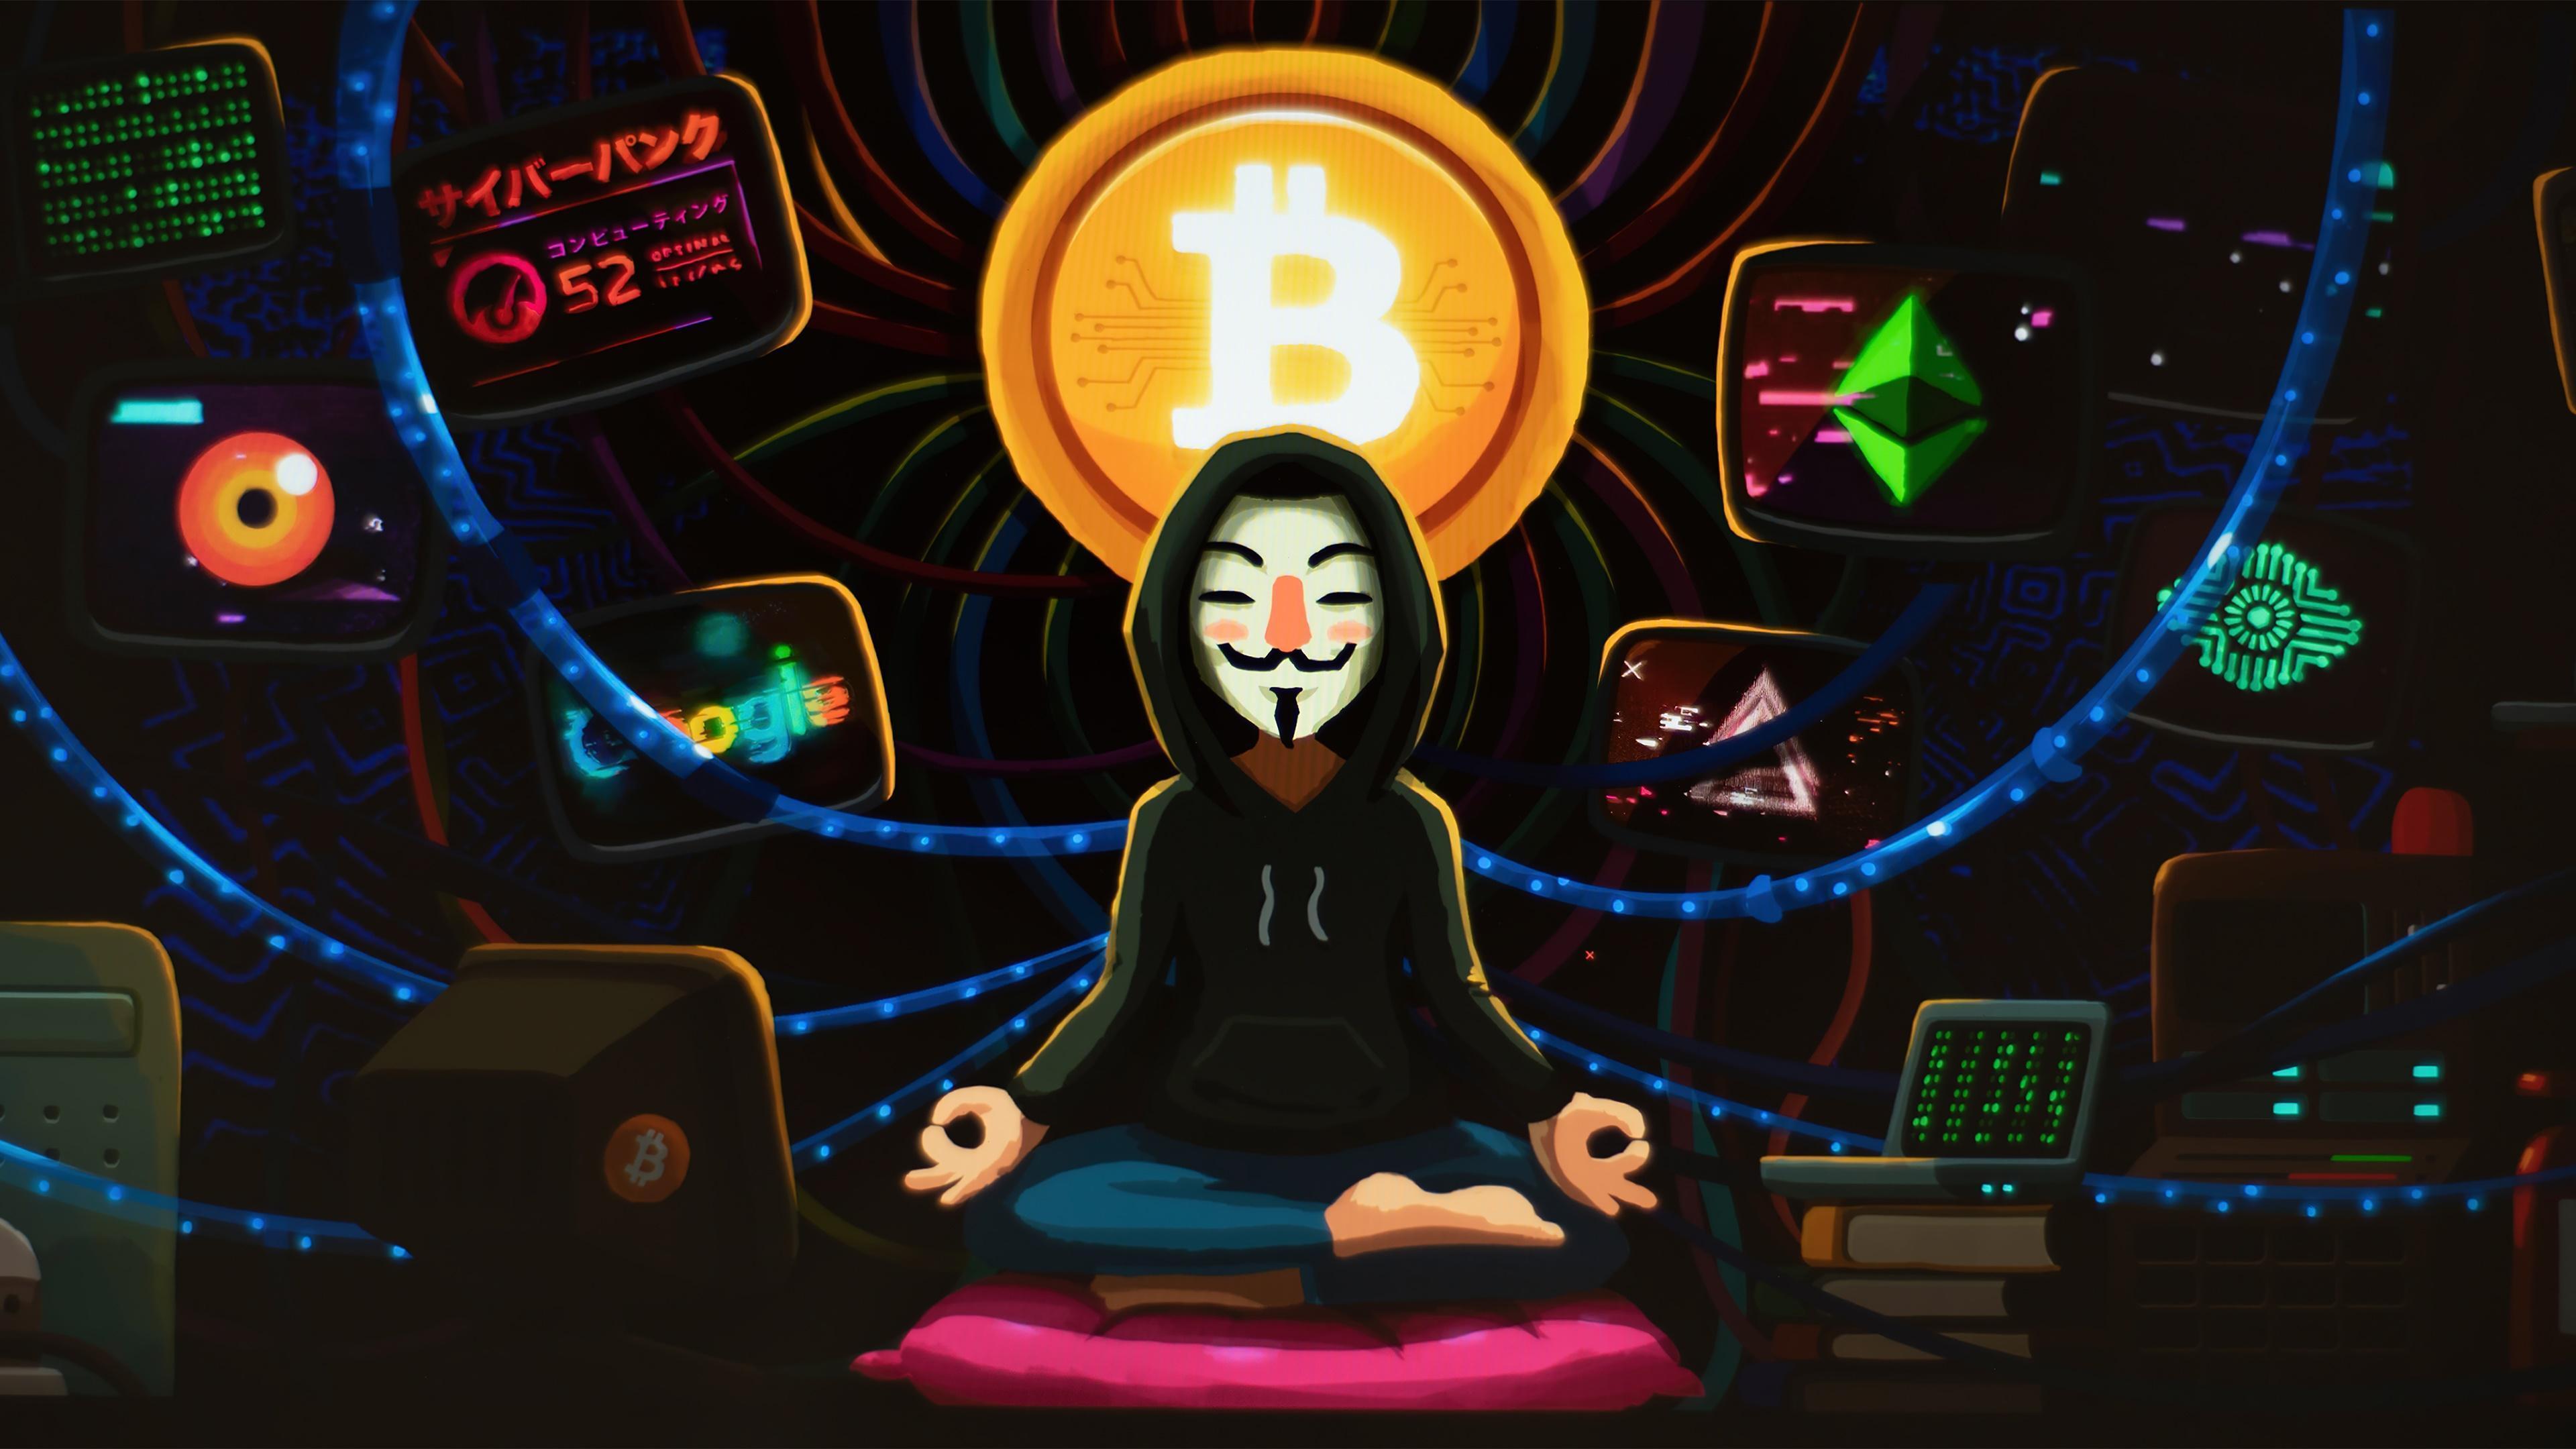 HD wallpaper, Anonymous, Bitcoin, Wallpaper, Hd, 4K, Meditation